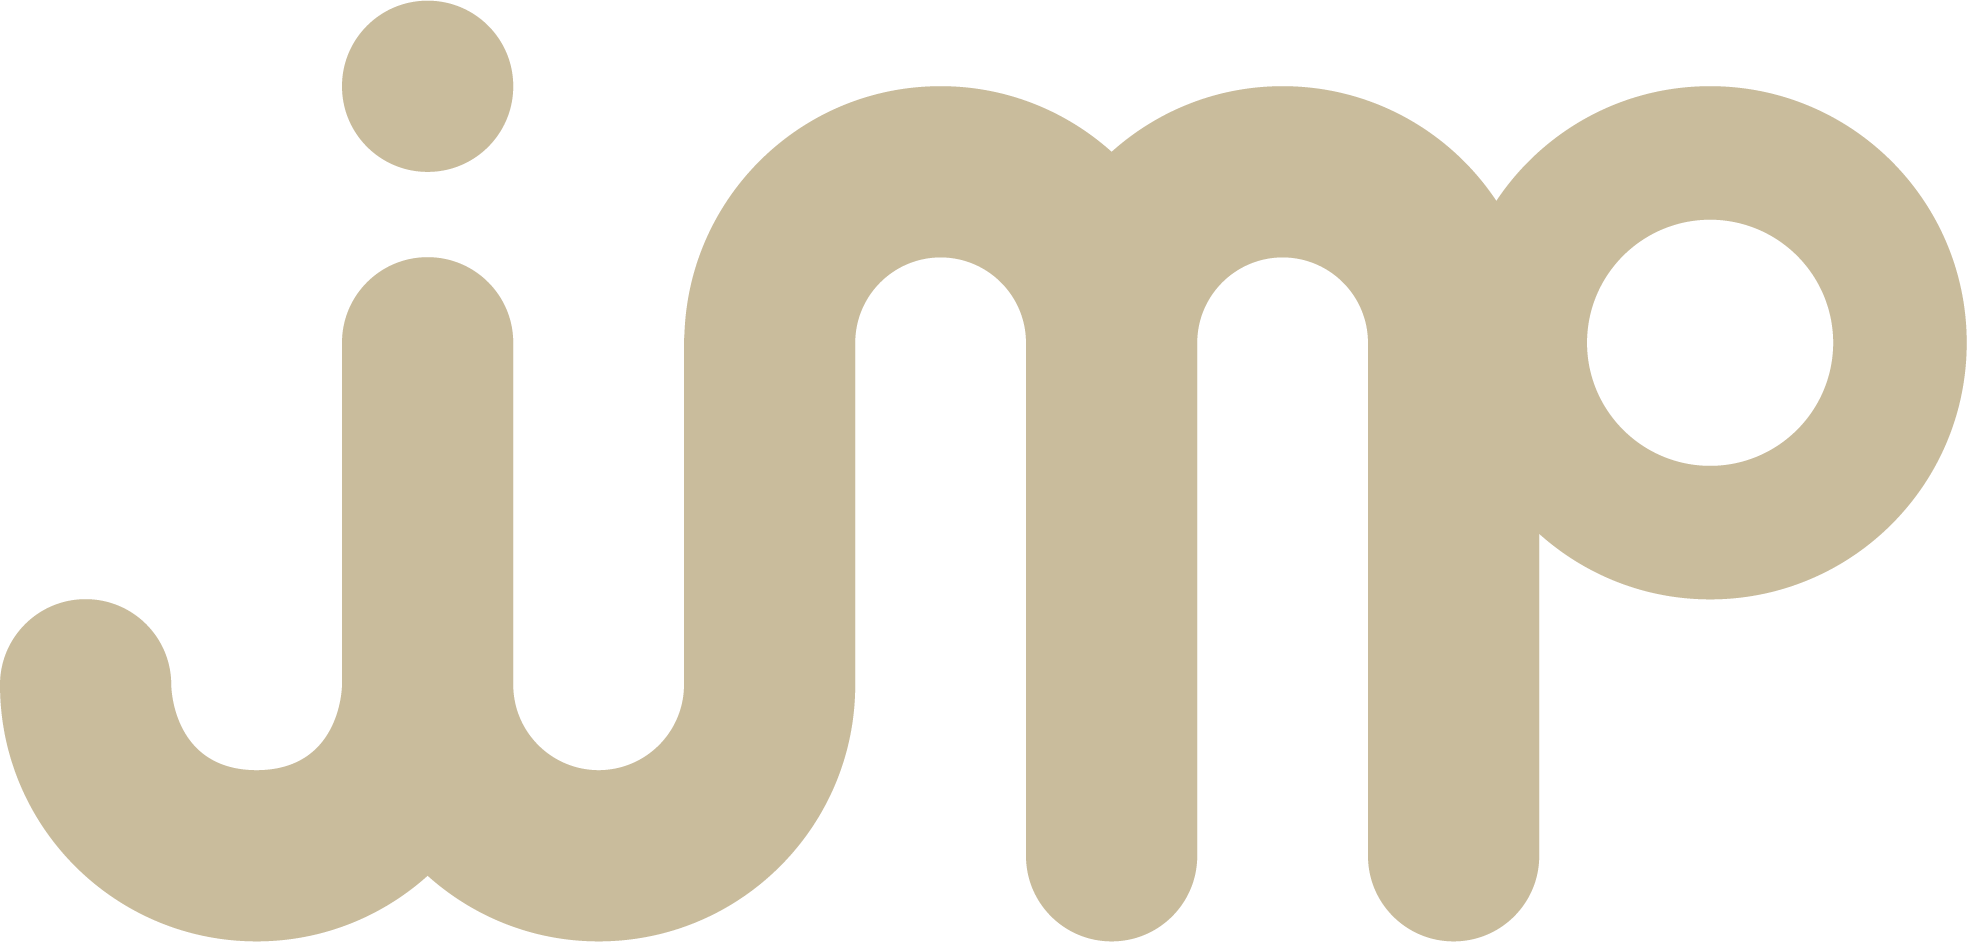 jump logo